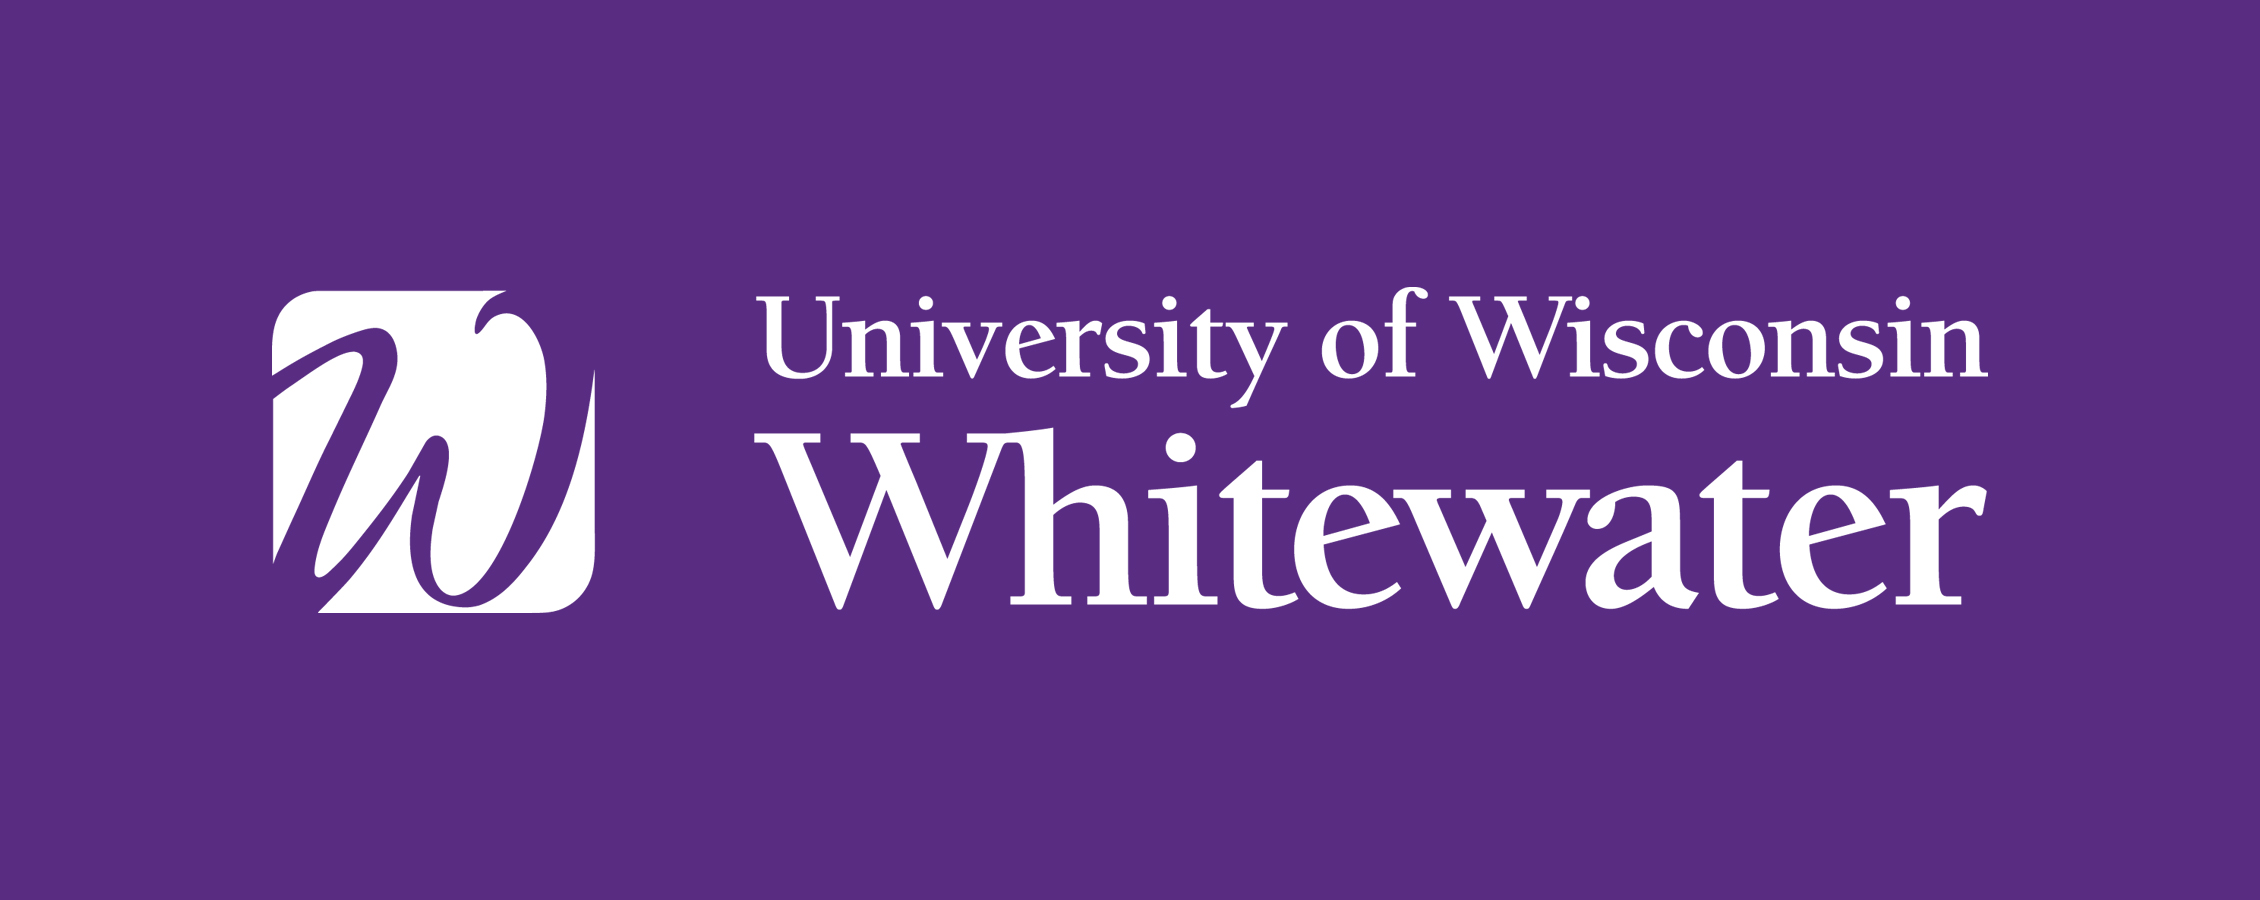 UW-Whitewater logo on a purple background.